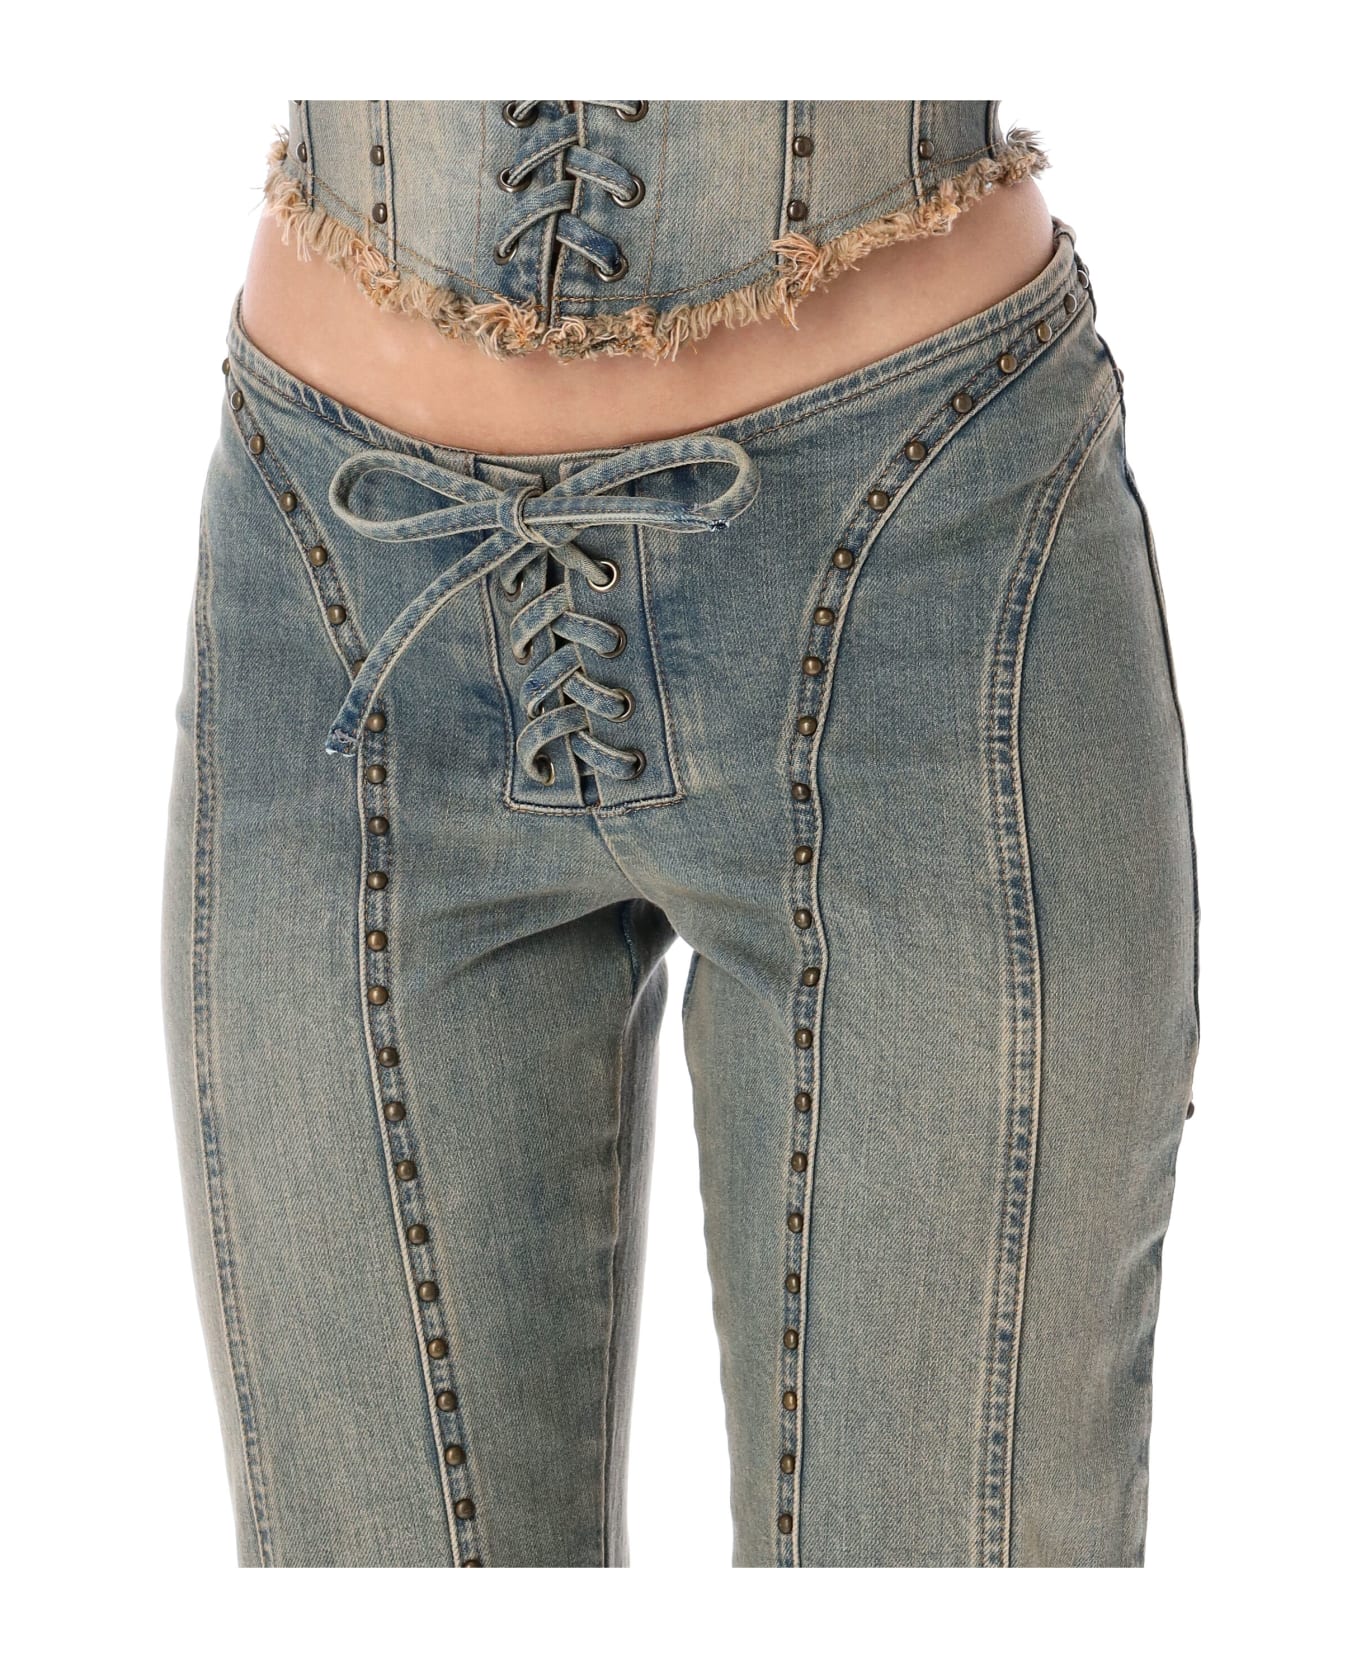 MISBHV Lara Laced Studded Jeans - BLUE SAND